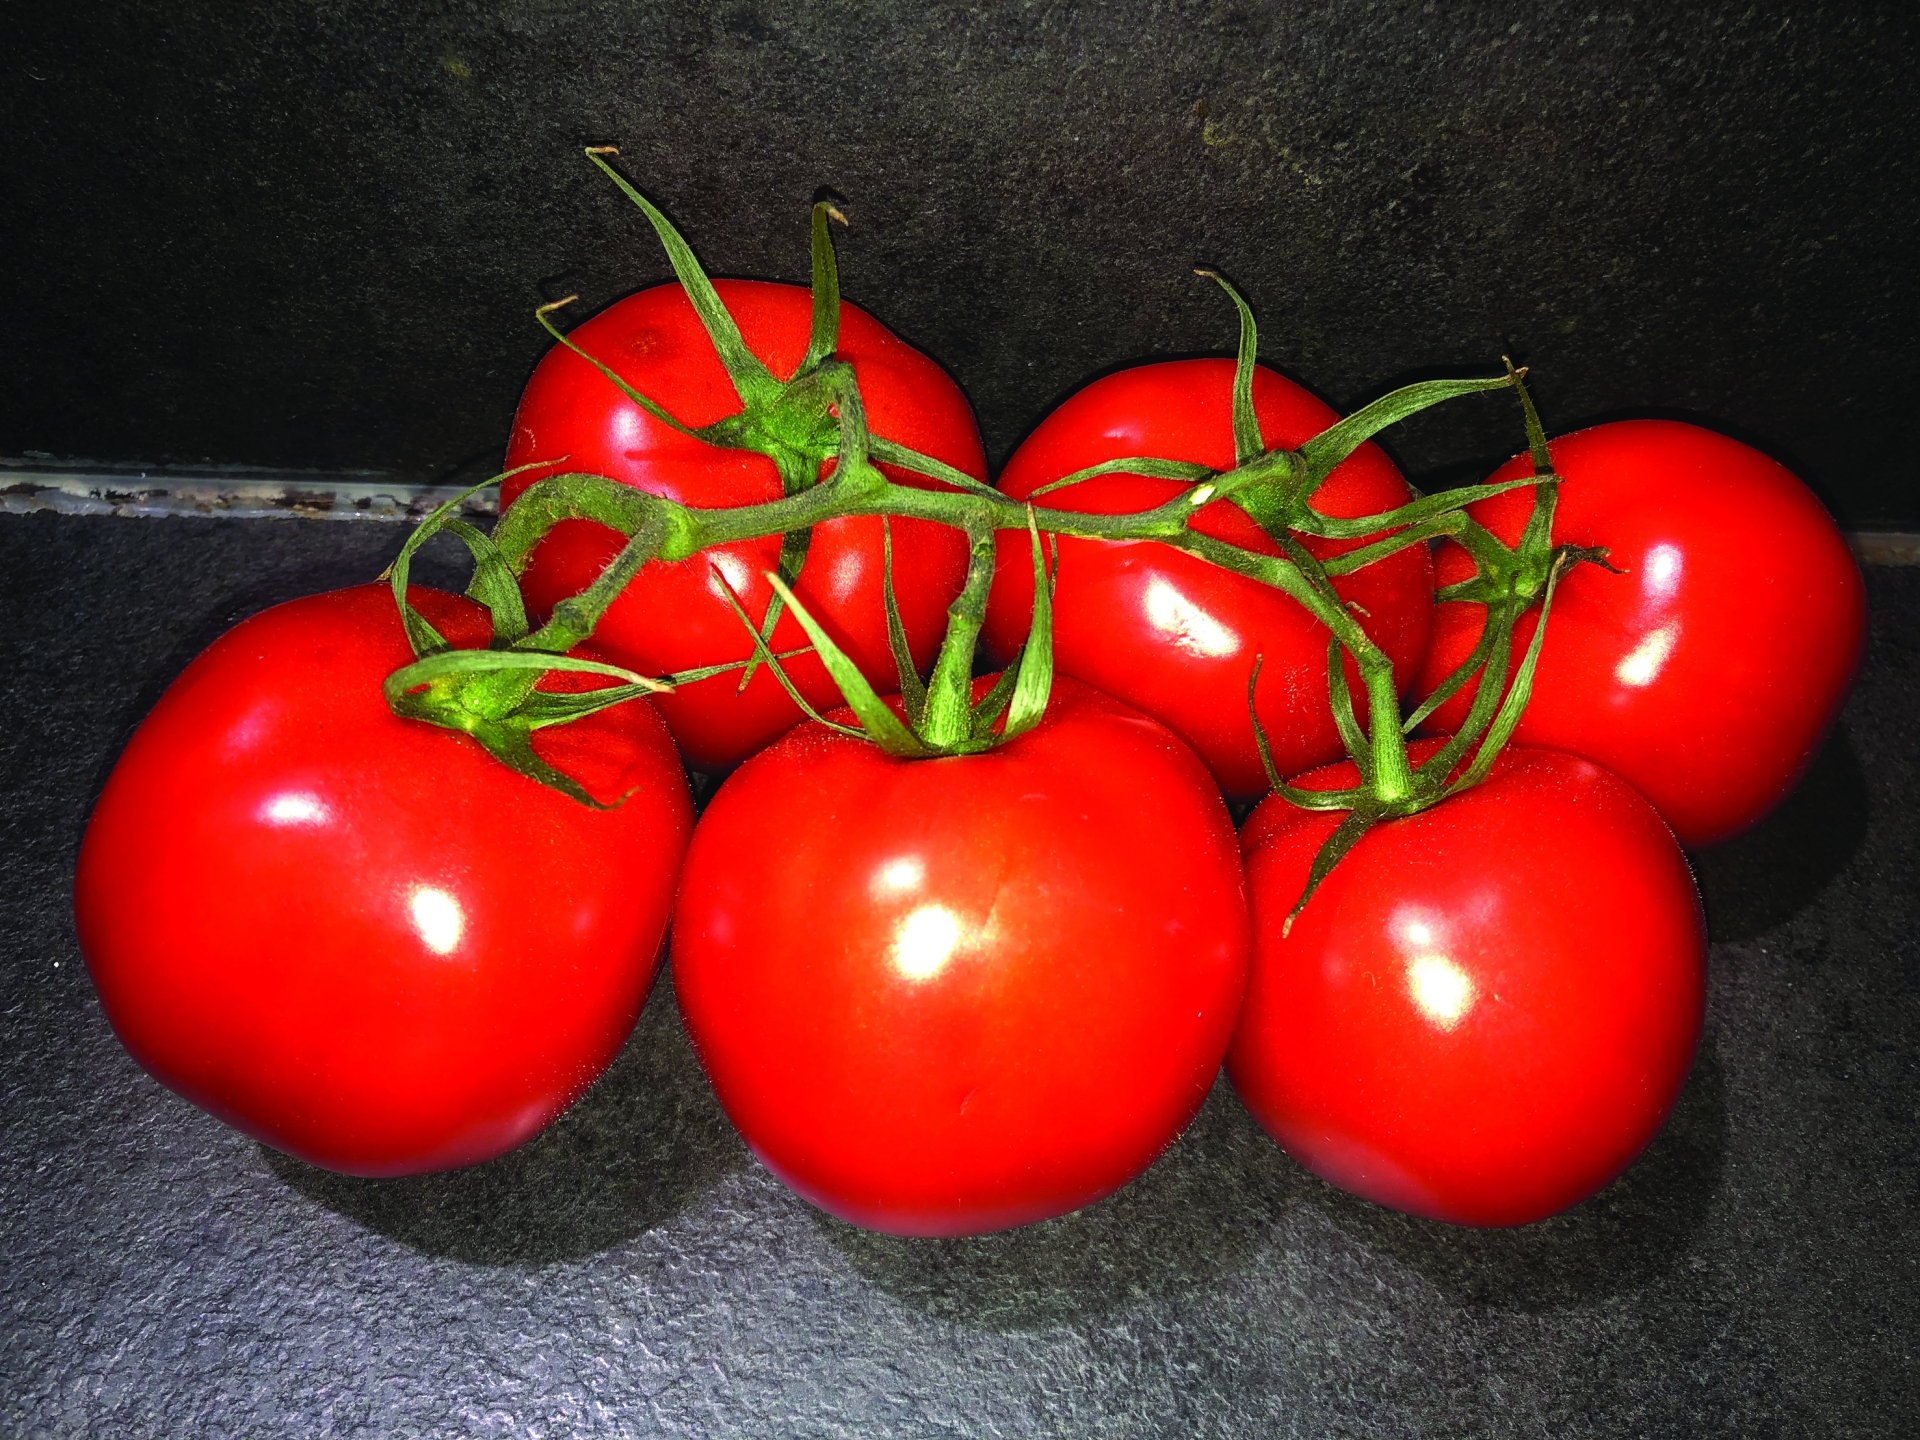 Une tomate grappe aux origines multiples